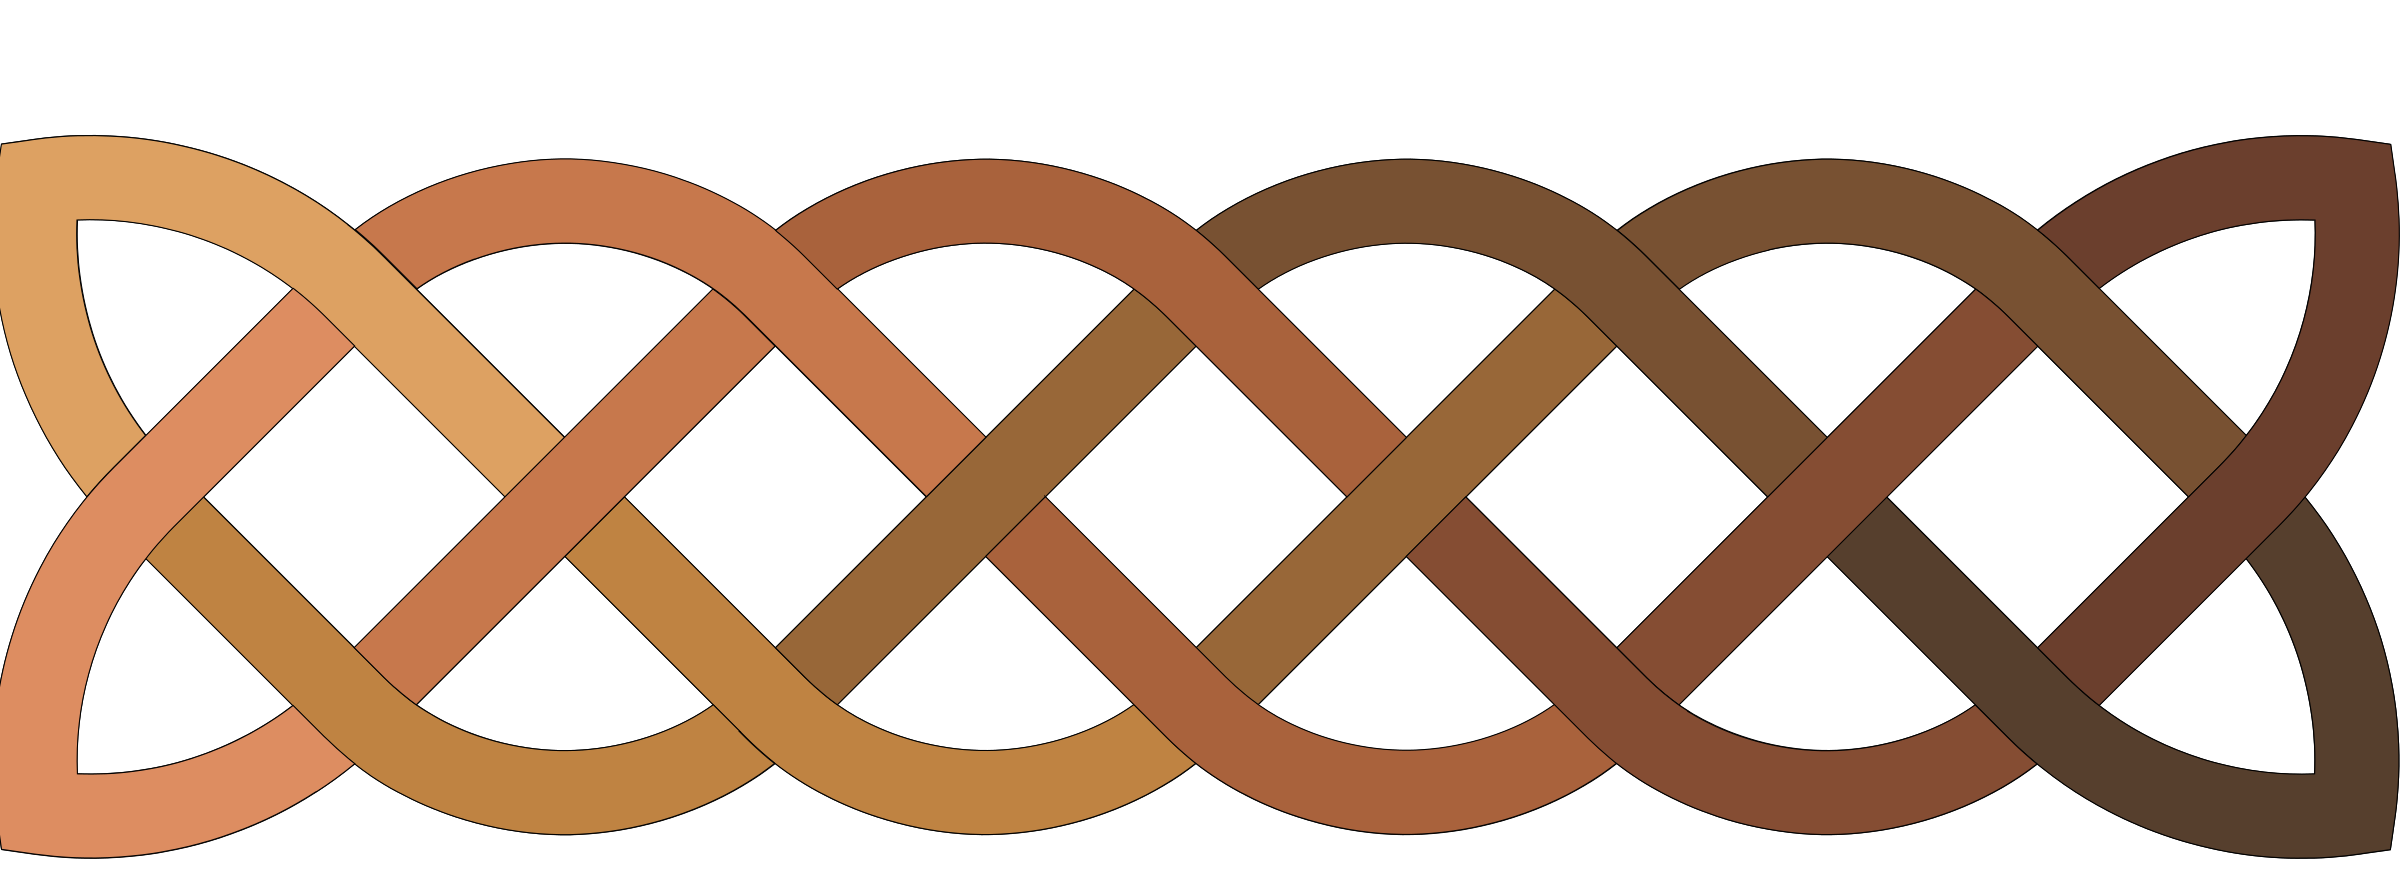 Celtic knot 2D design SVG Clip arts